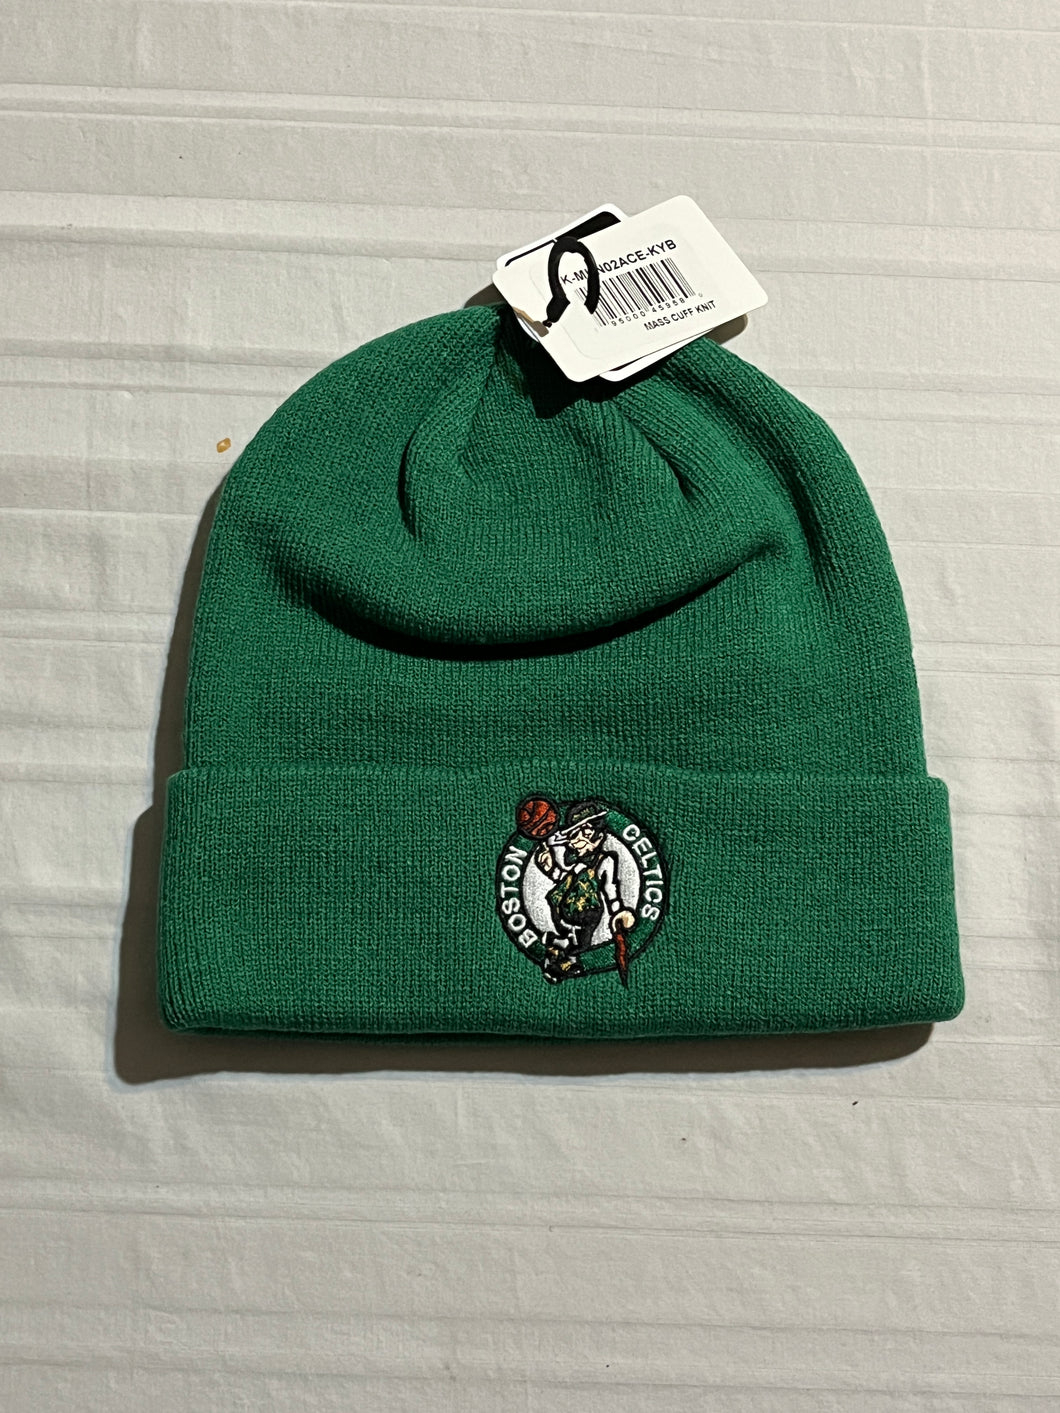 Boston Celtics NBA Fan Favorite Green Winter Beanie Knit Ski Cap Hat - Casey's Sports Store